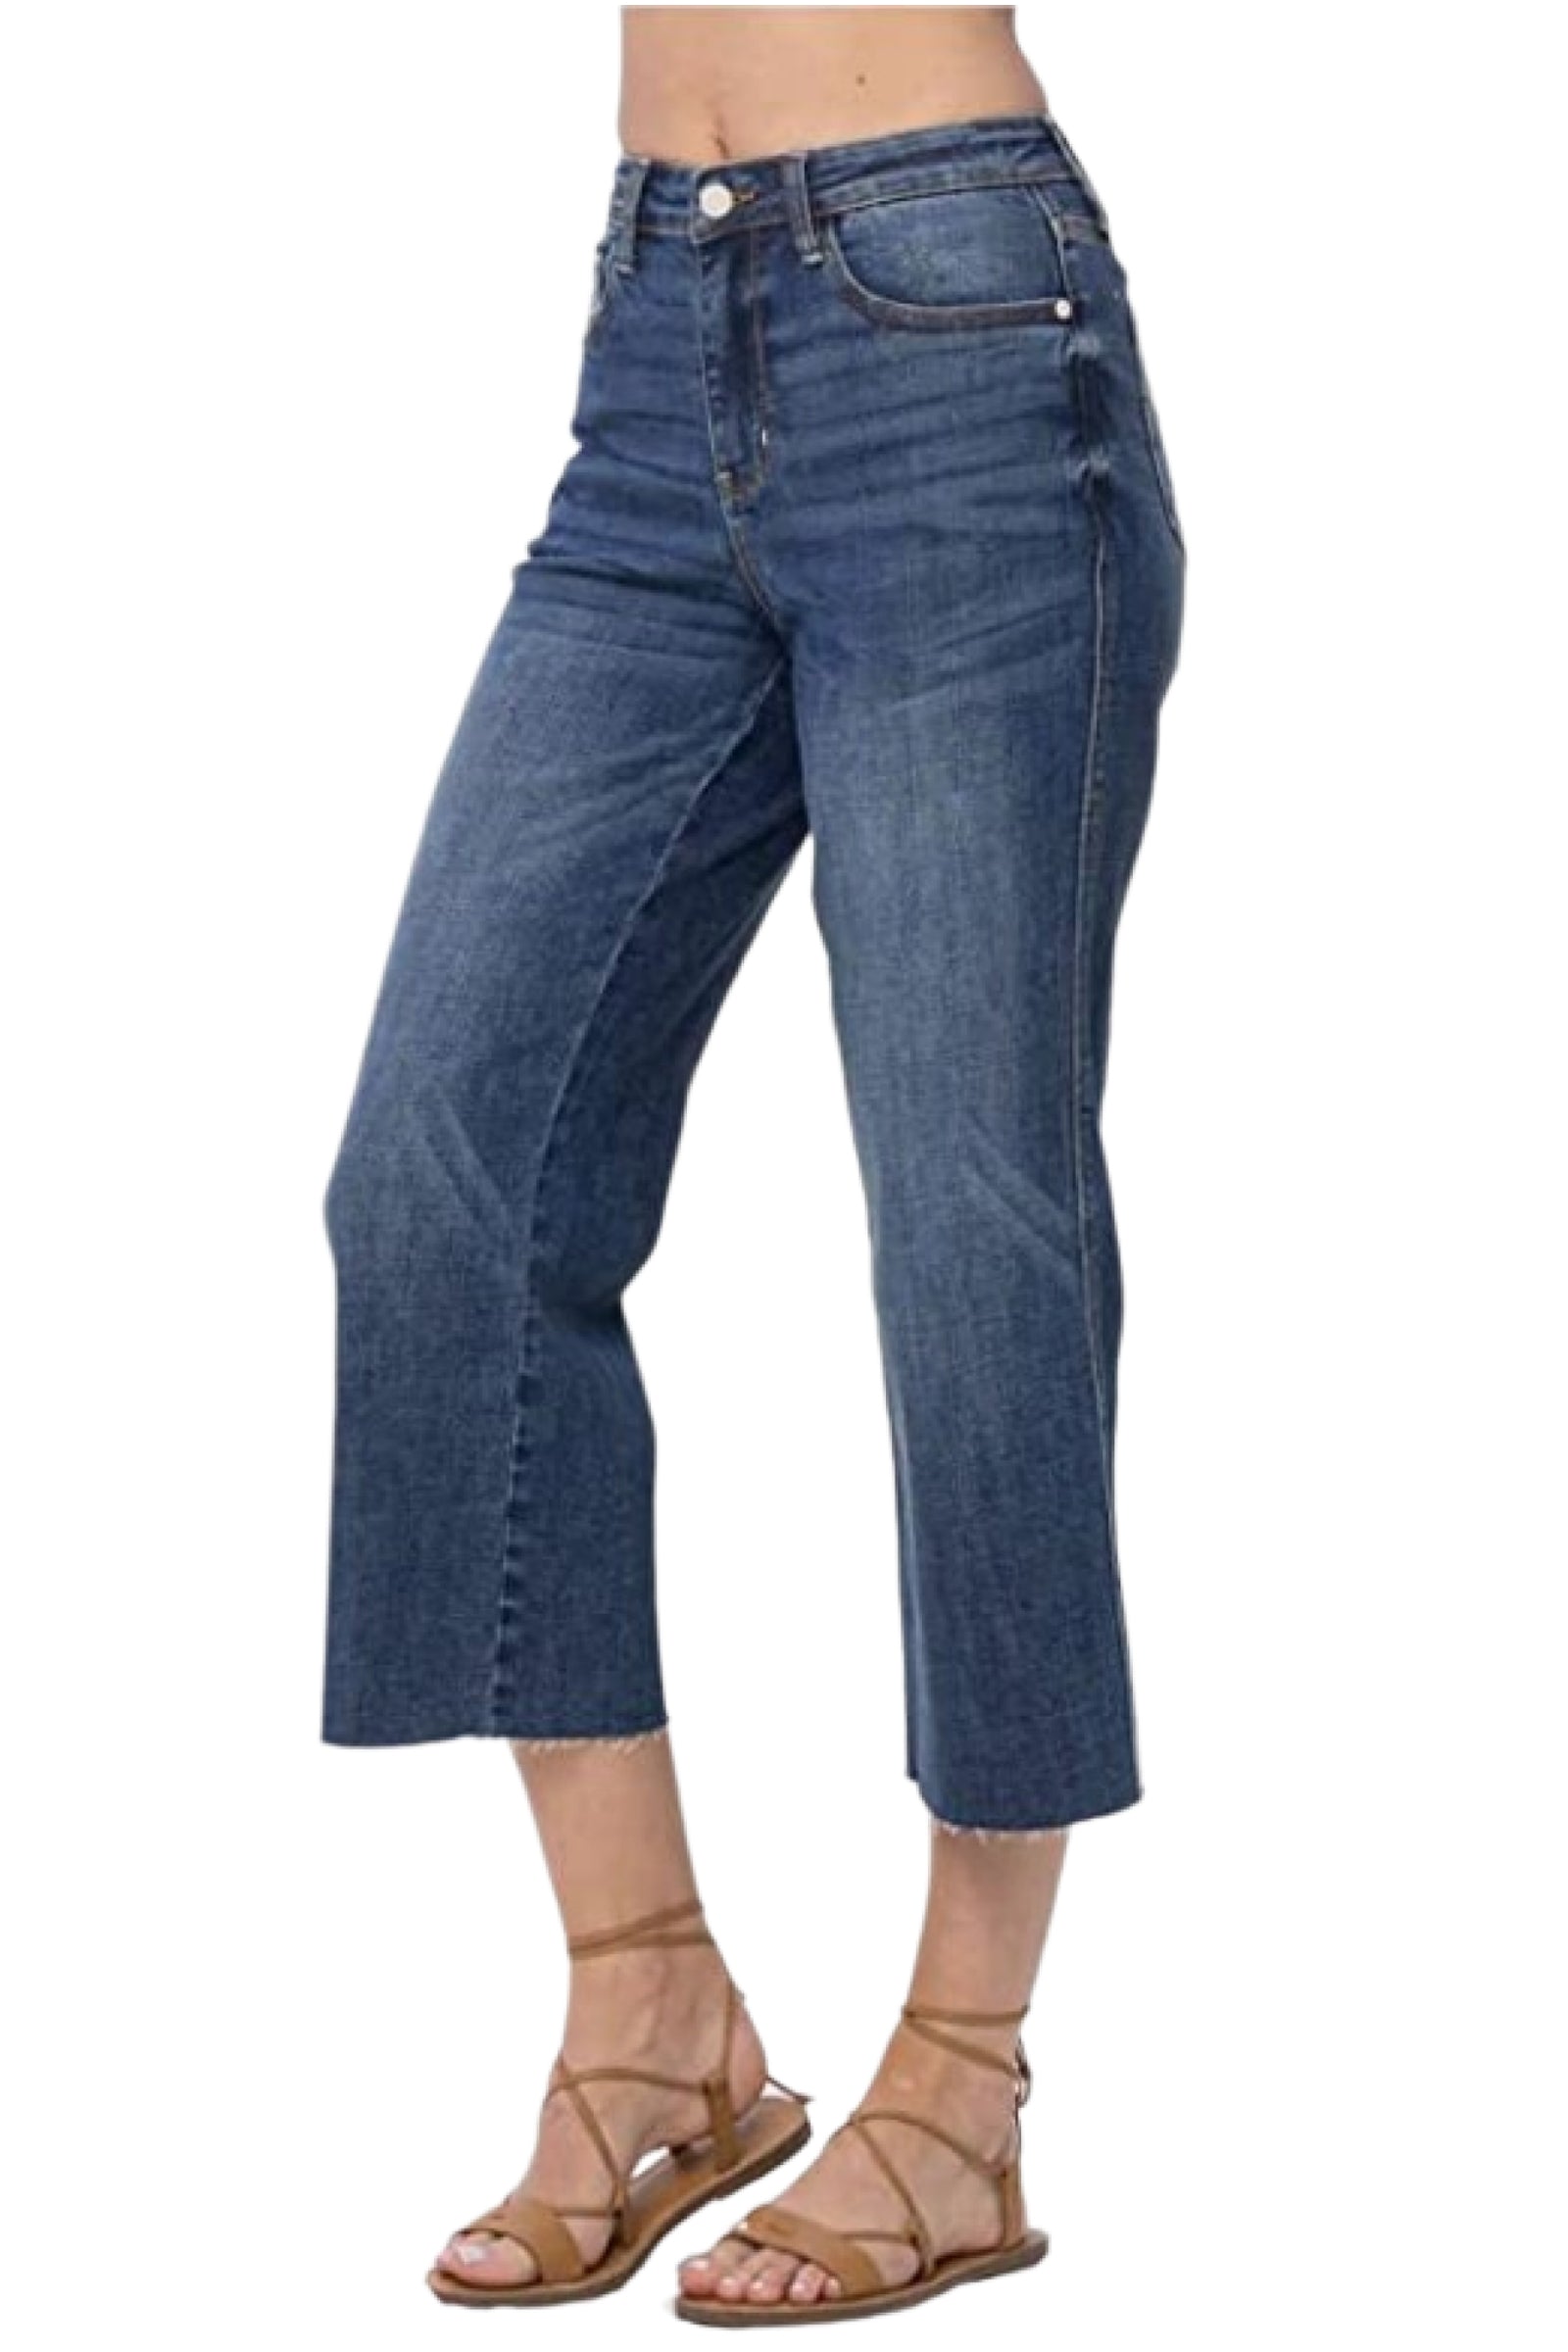 Side View, Judy Blue High Waist Pocket Embroidery Crop Wide Leg Jeans, 88612